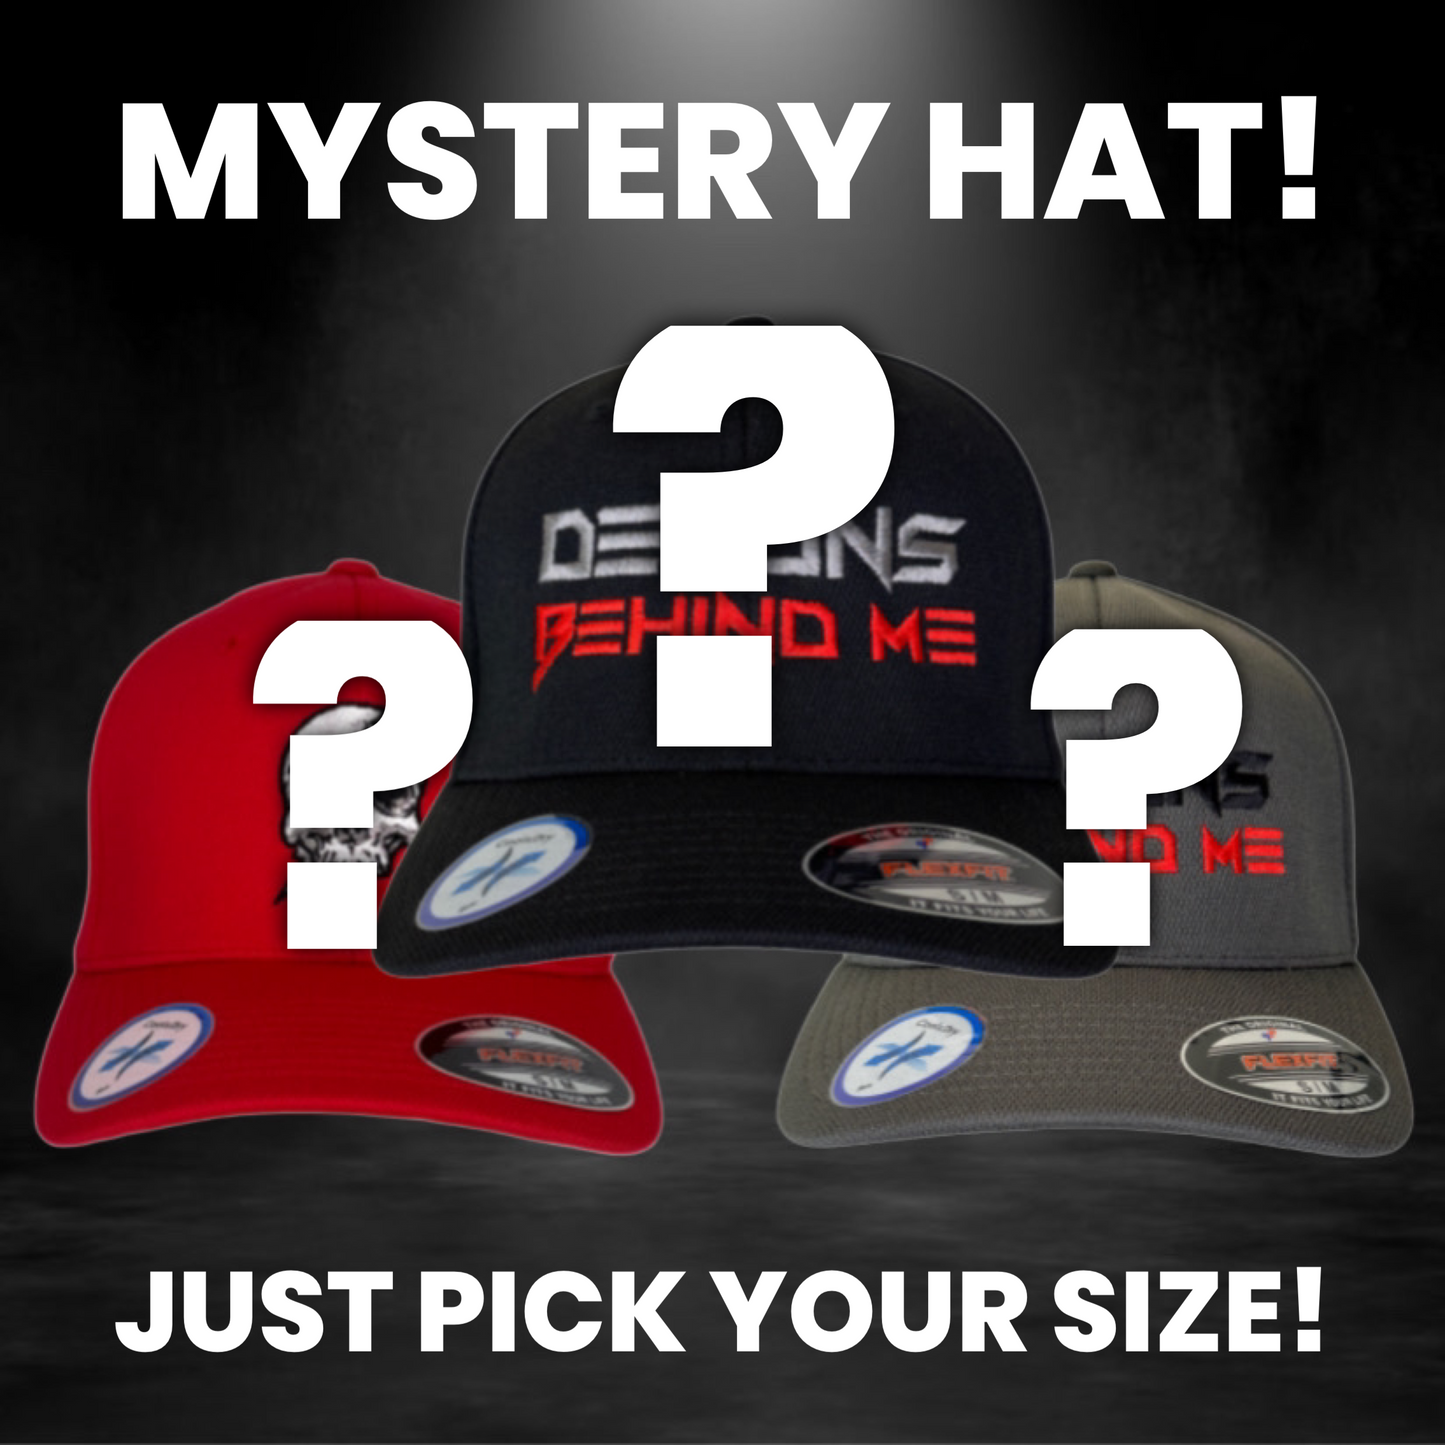 Flexfit "Never Fade" Mystery Hat!